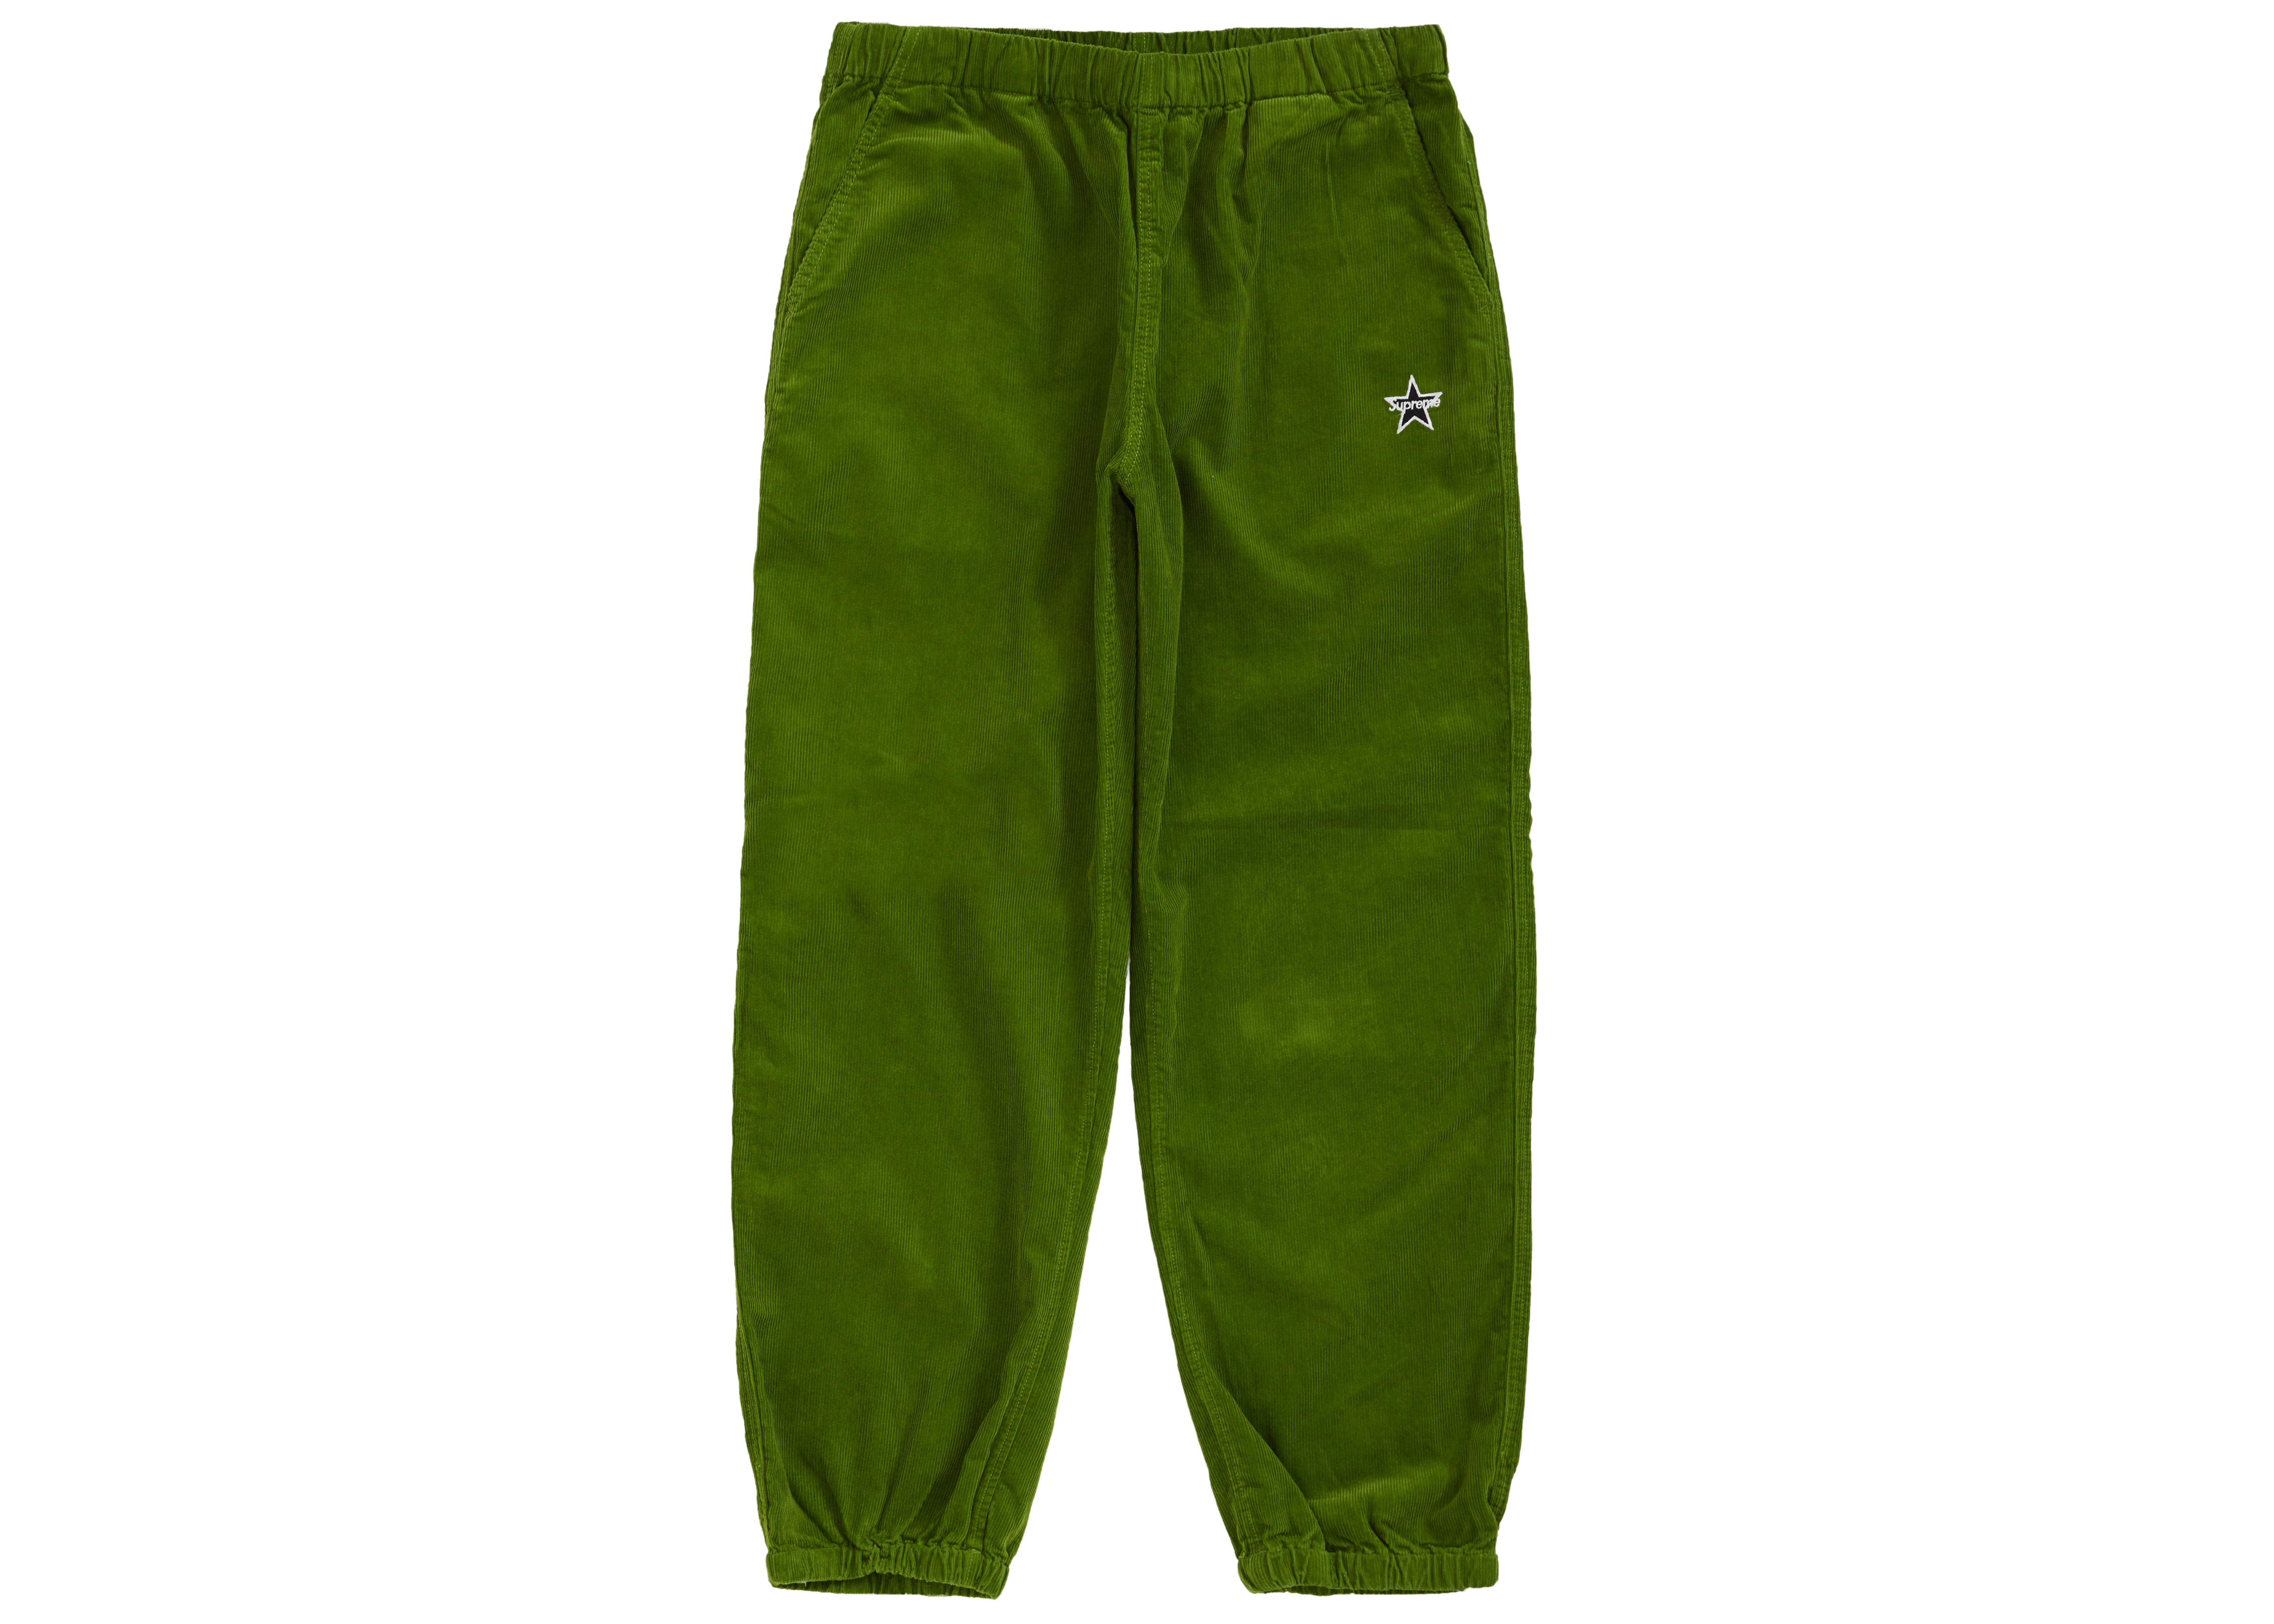 Supreme Corduroy Skate Pant Green Men's - FW19 - US